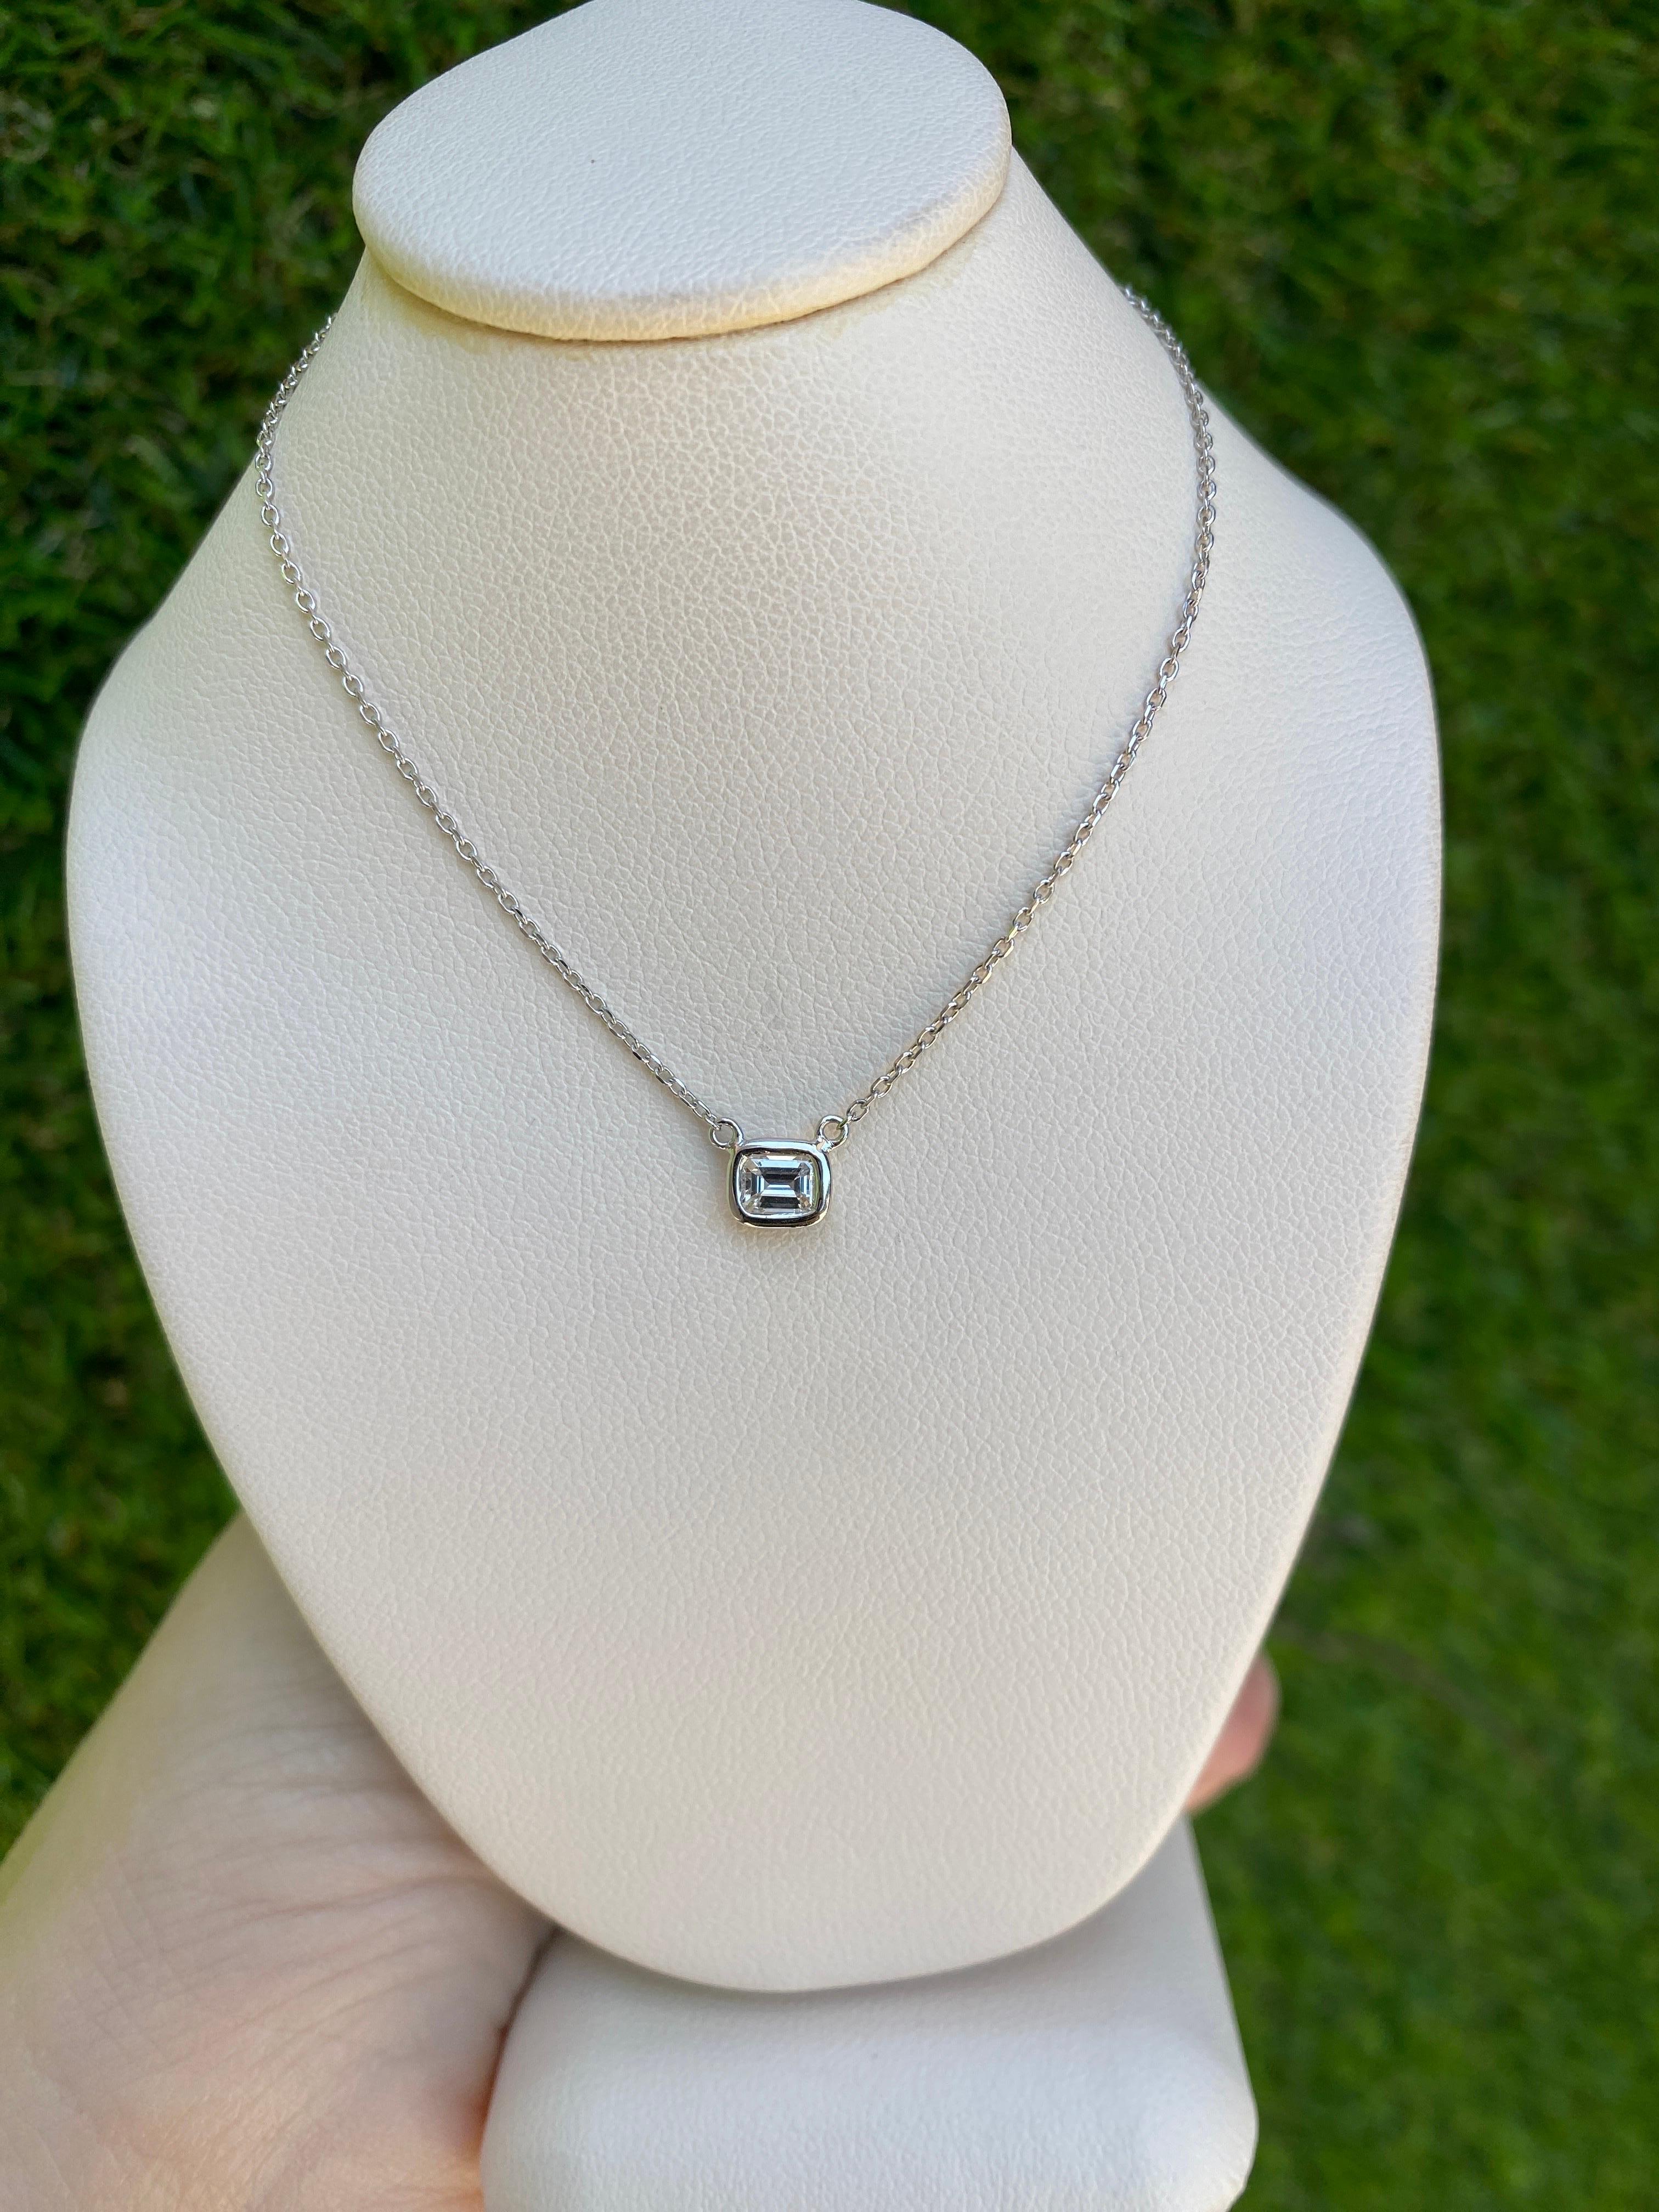 14k White Gold 0.23 Carat Natural Emerald Cut Diamond Pendant Necklace  For Sale 7